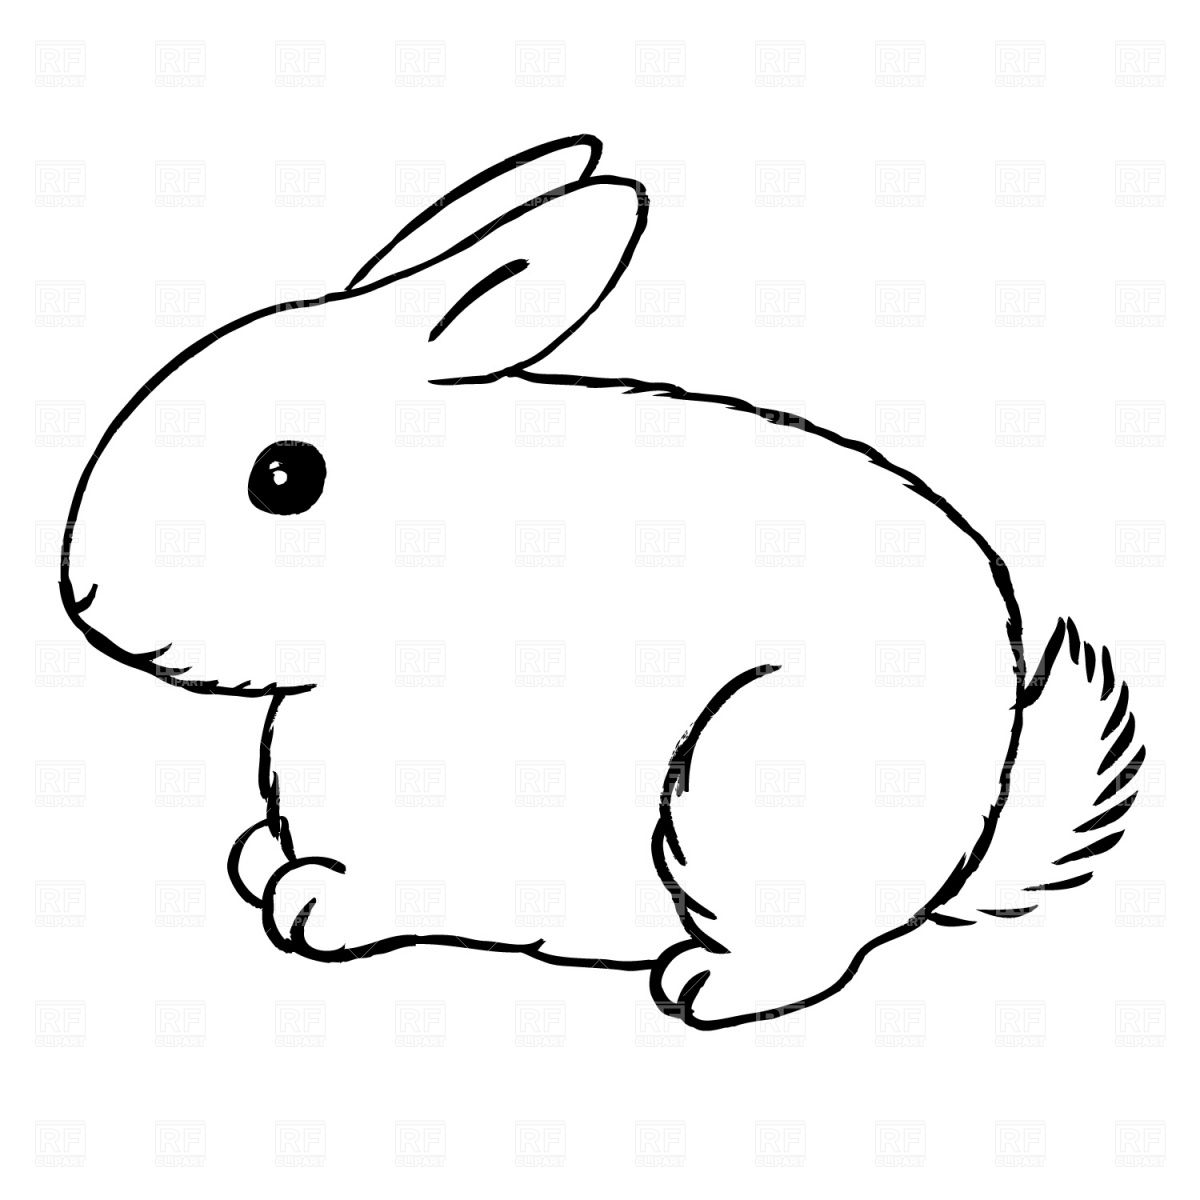 Rabbit clip art.